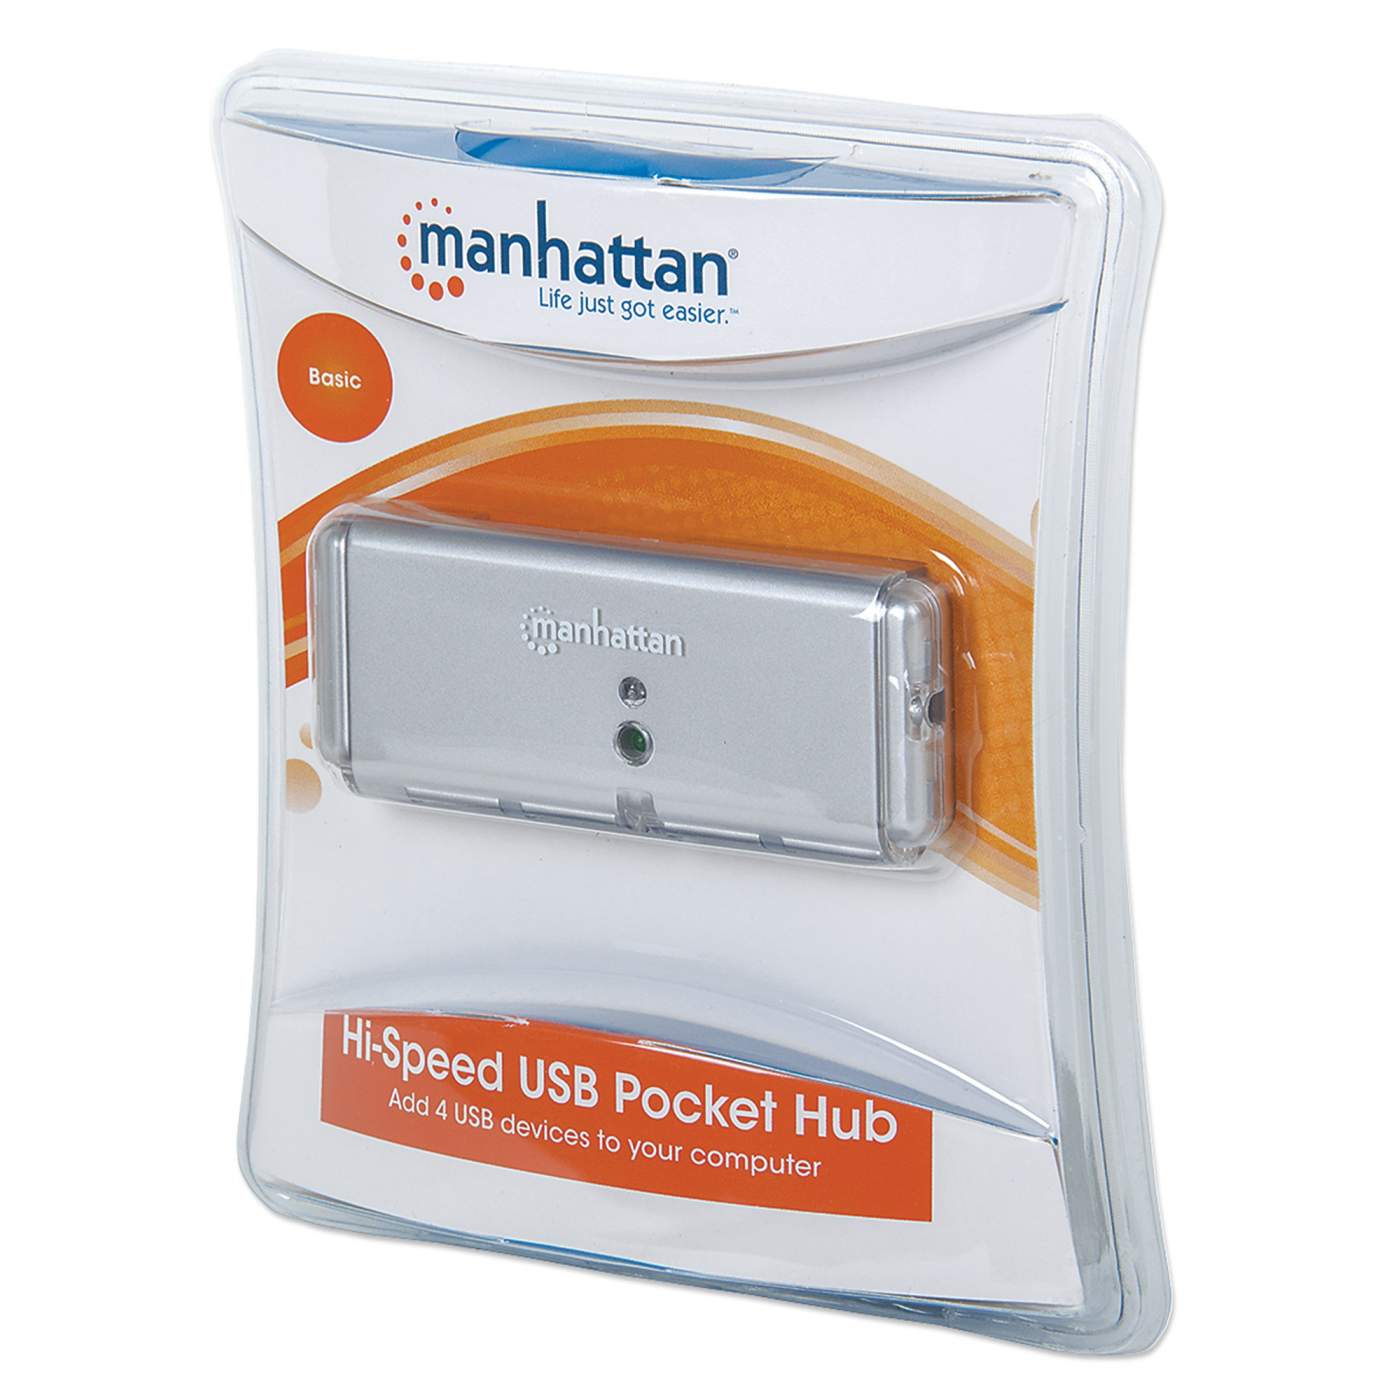 Hi-Speed USB Pocket Hub Packaging Image 2